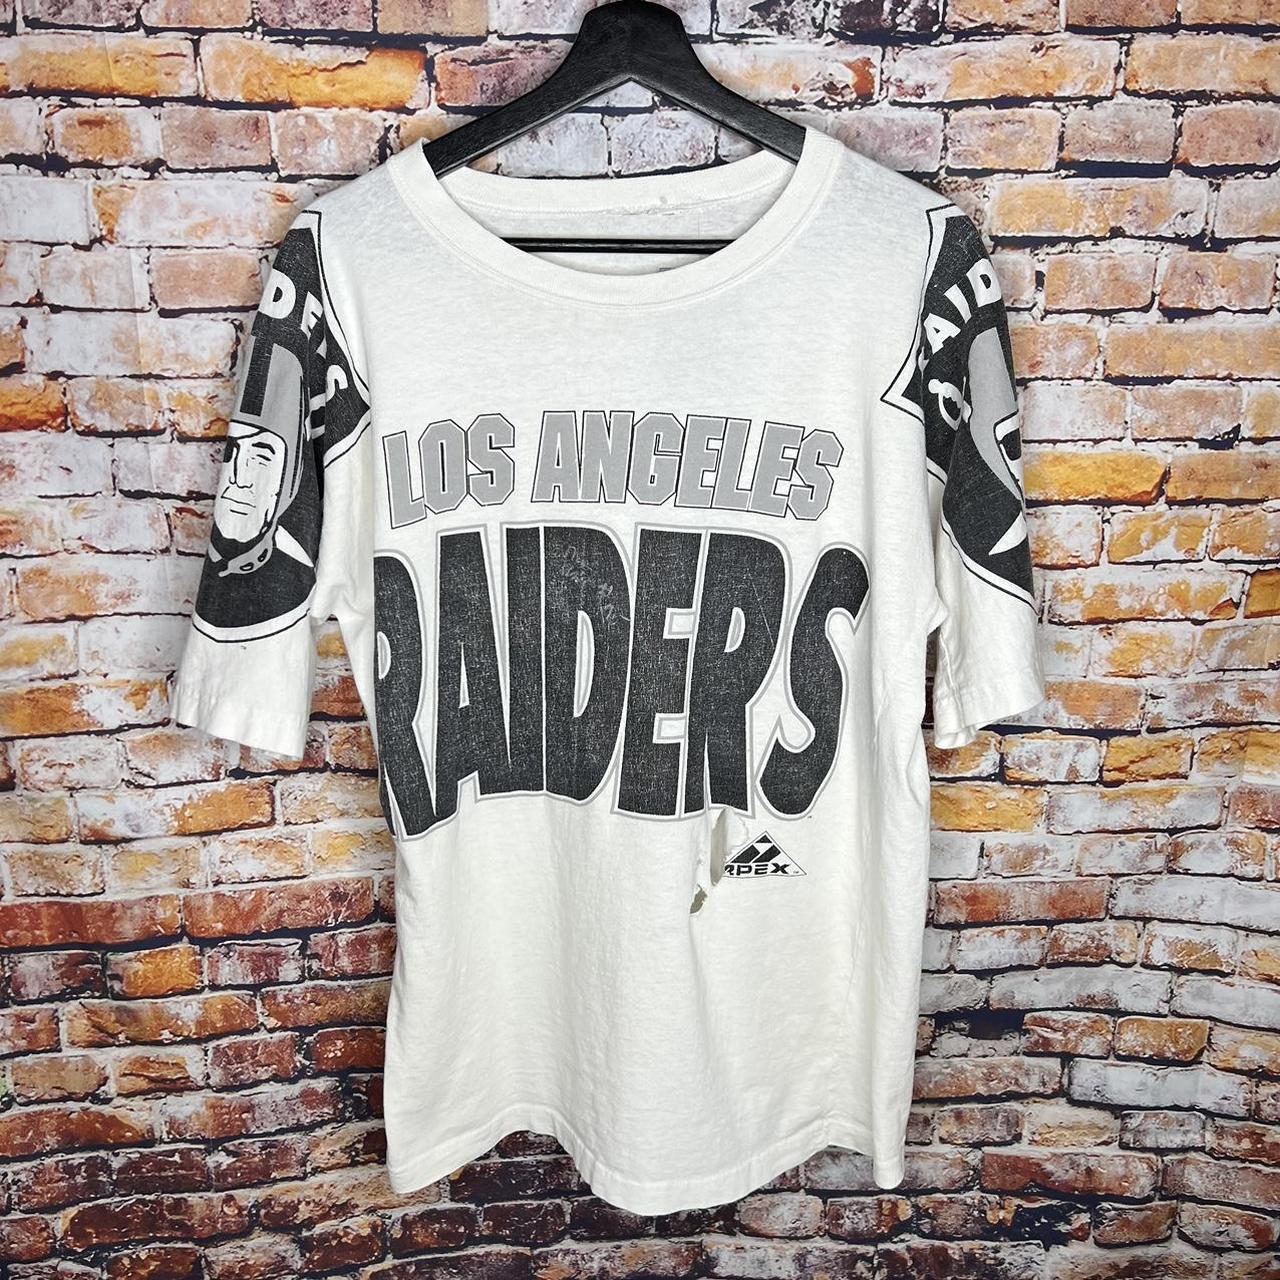 los angeles raiders t shirt vintage